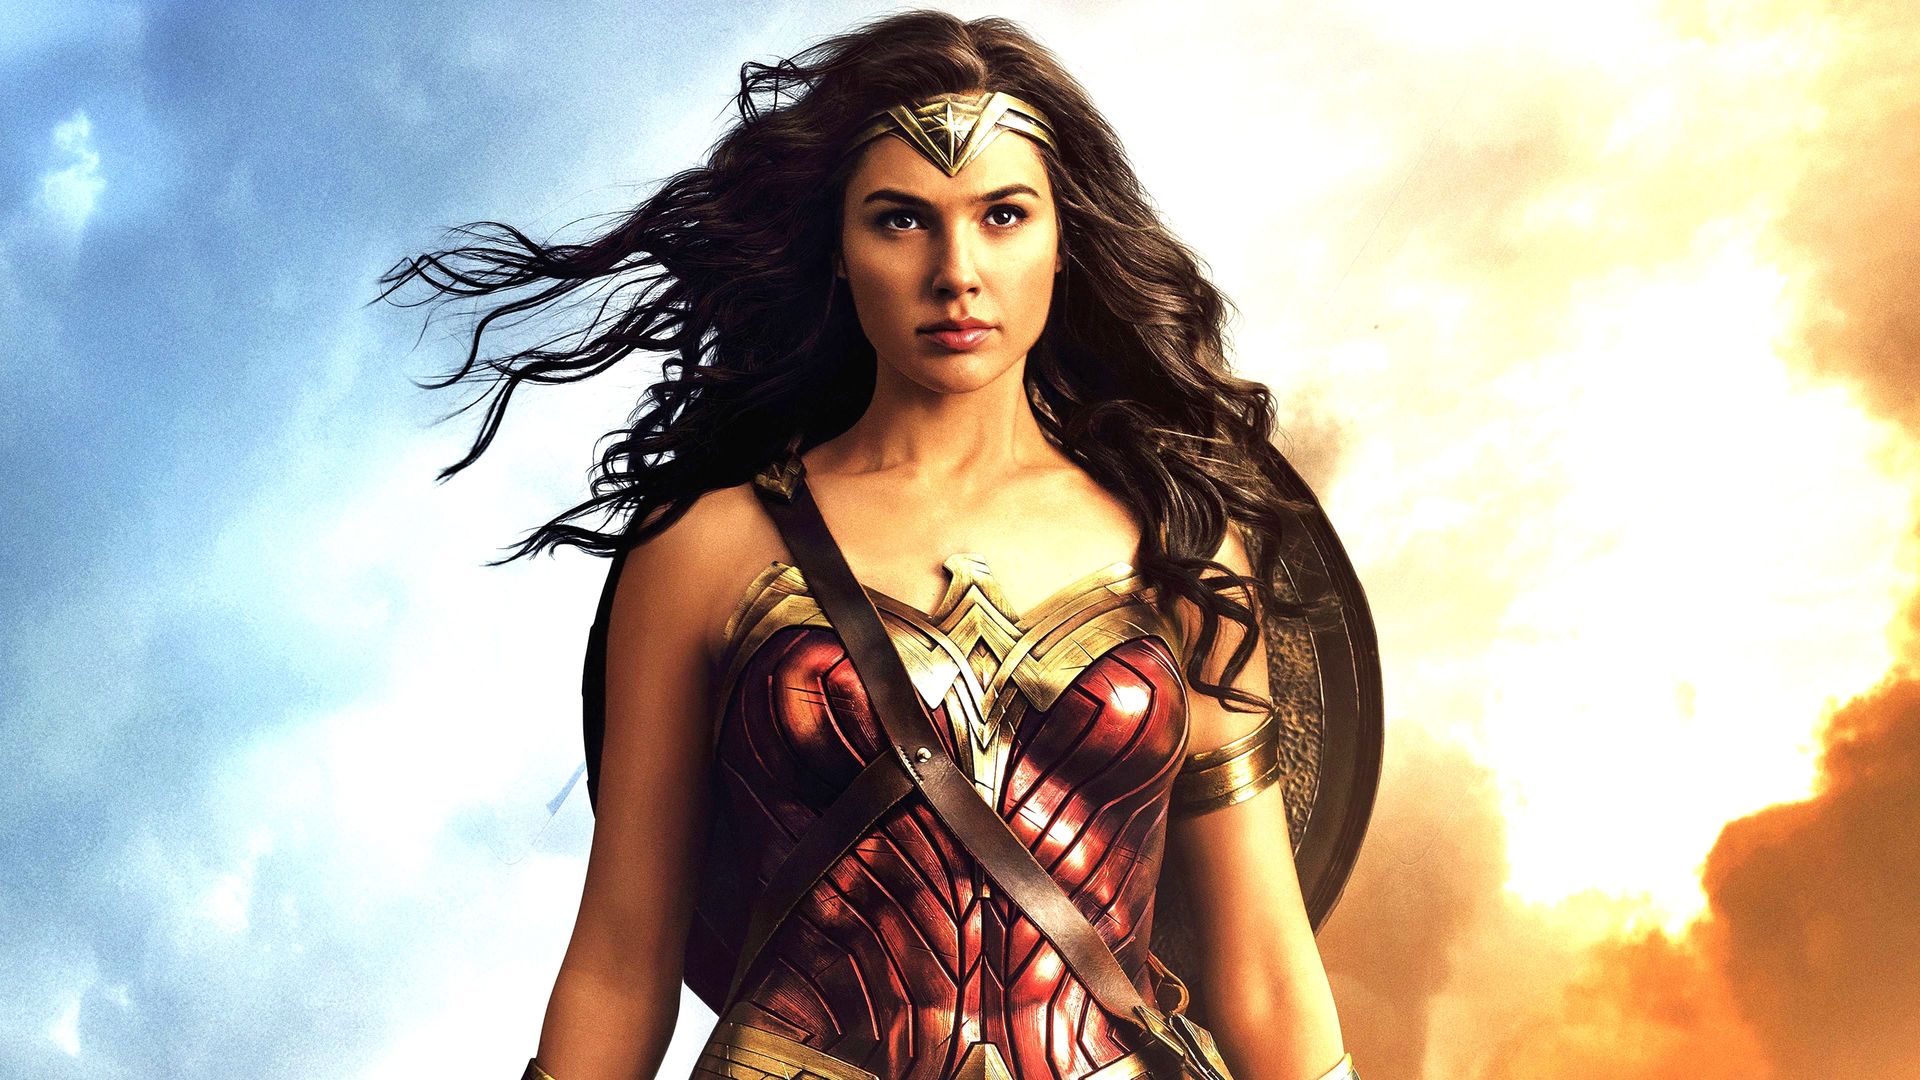 Nädala parim film: ostke Gal Gadotiga film "Wonder Woman" hinnaga 9,90 R $!